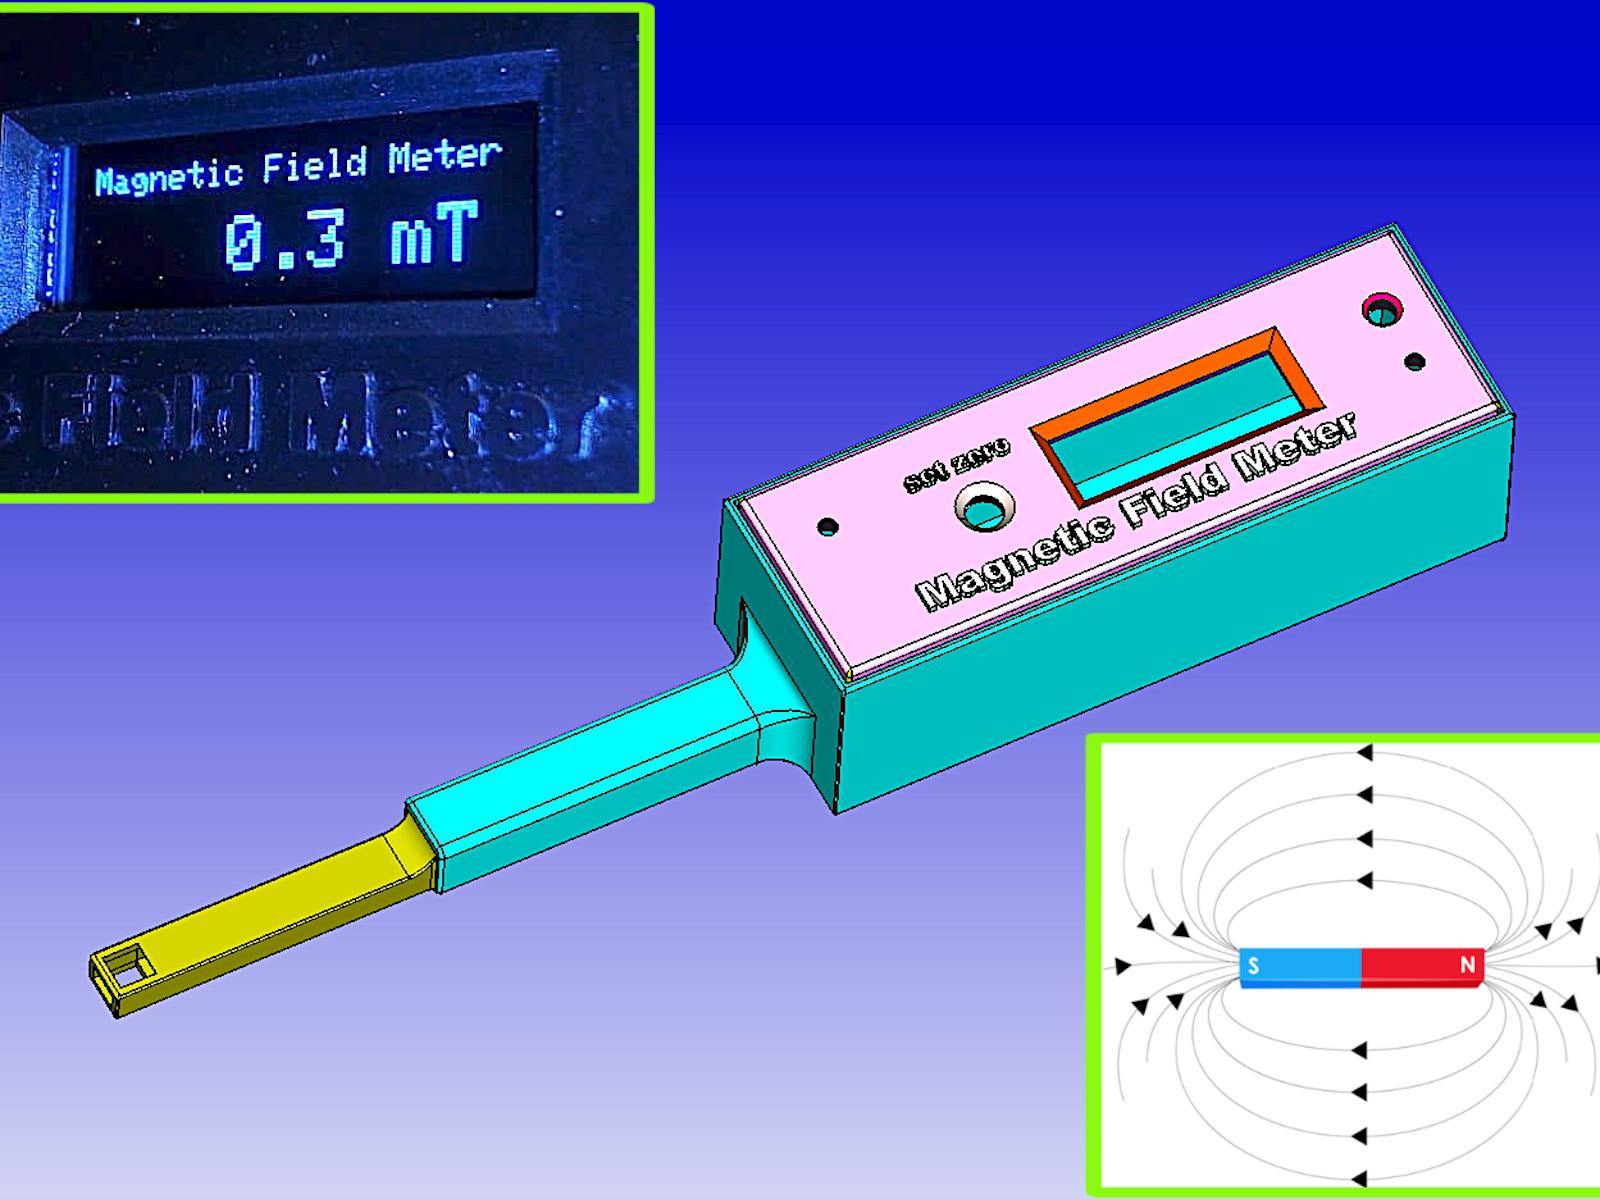 Magnetic Field Meter range 200mT (milliTesla) -